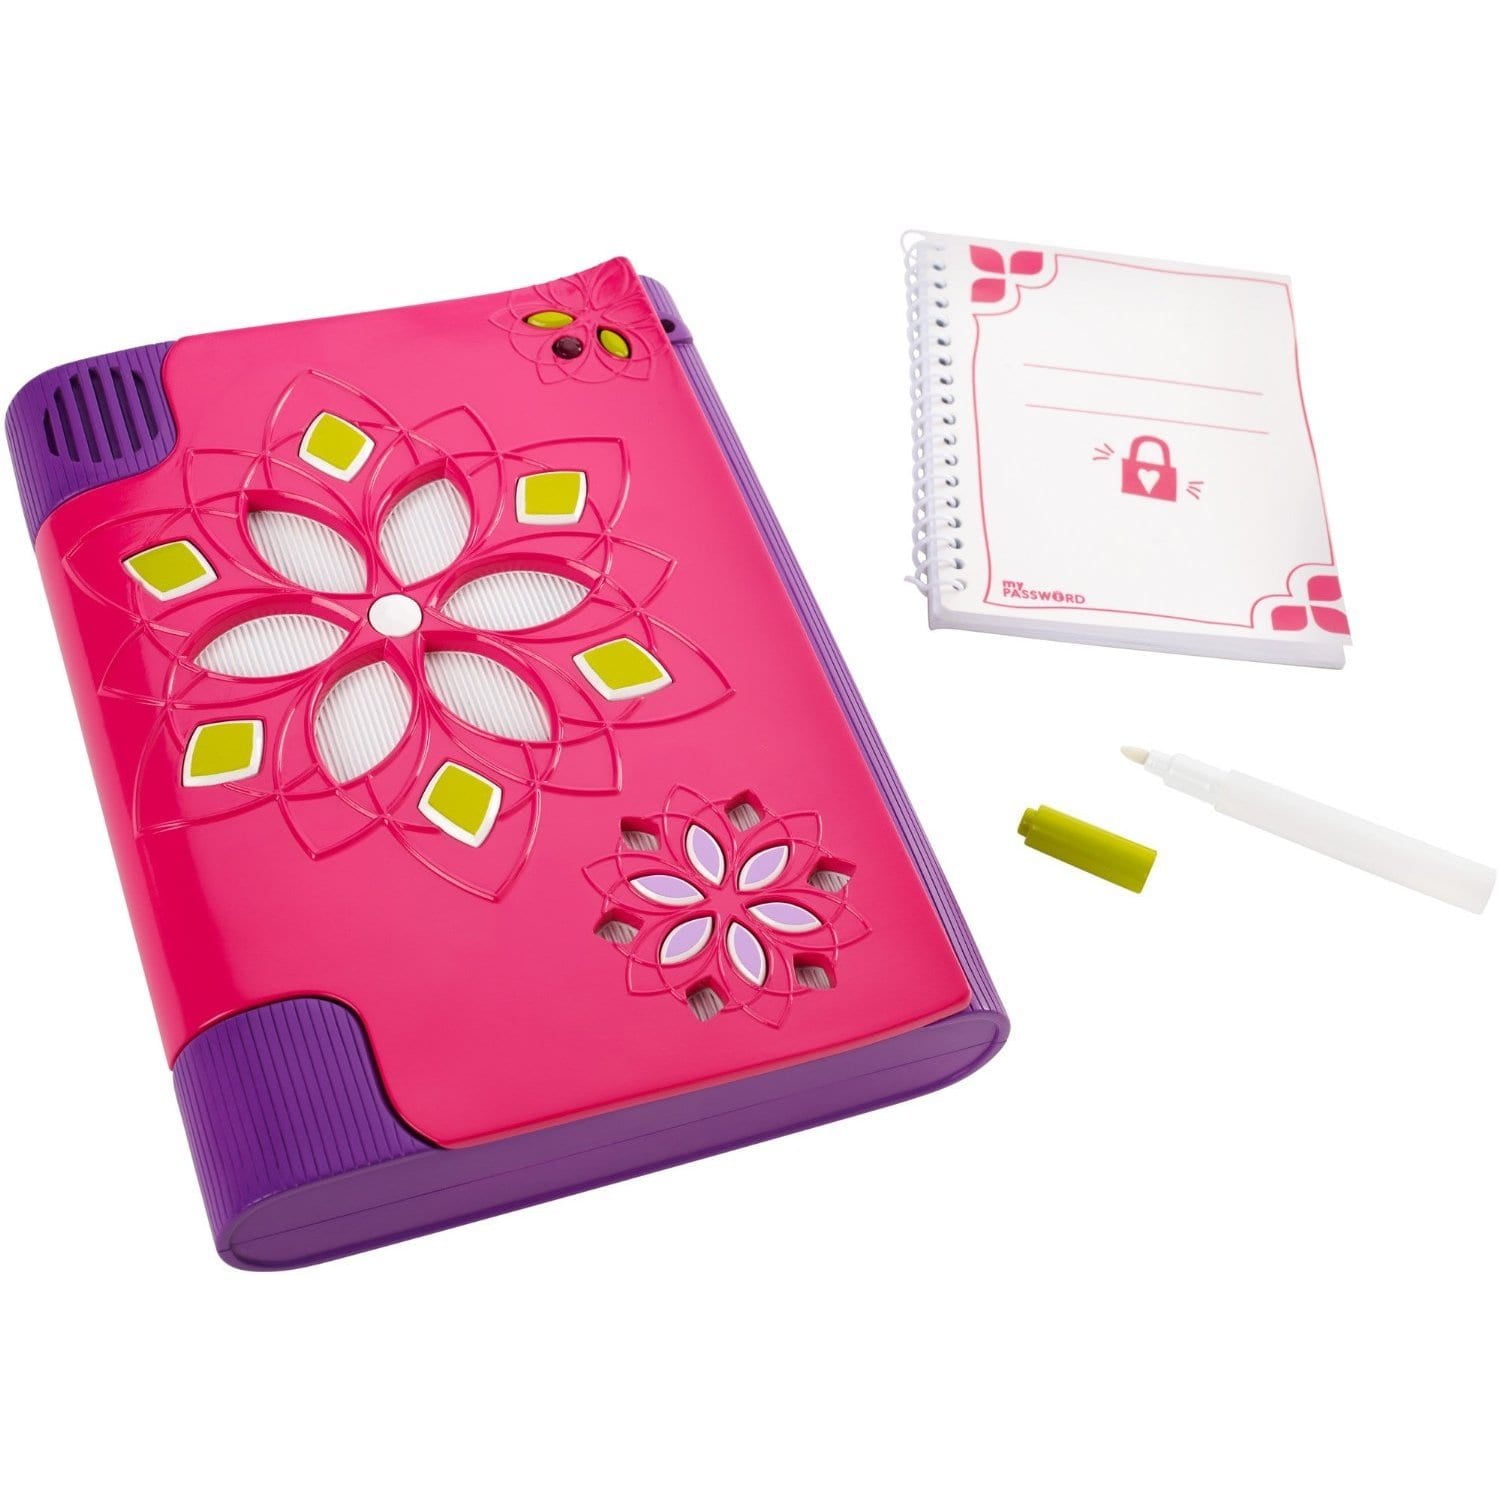 Diary Notebook with Lock Girls Kids Password Journal Memories Secrets New Gift